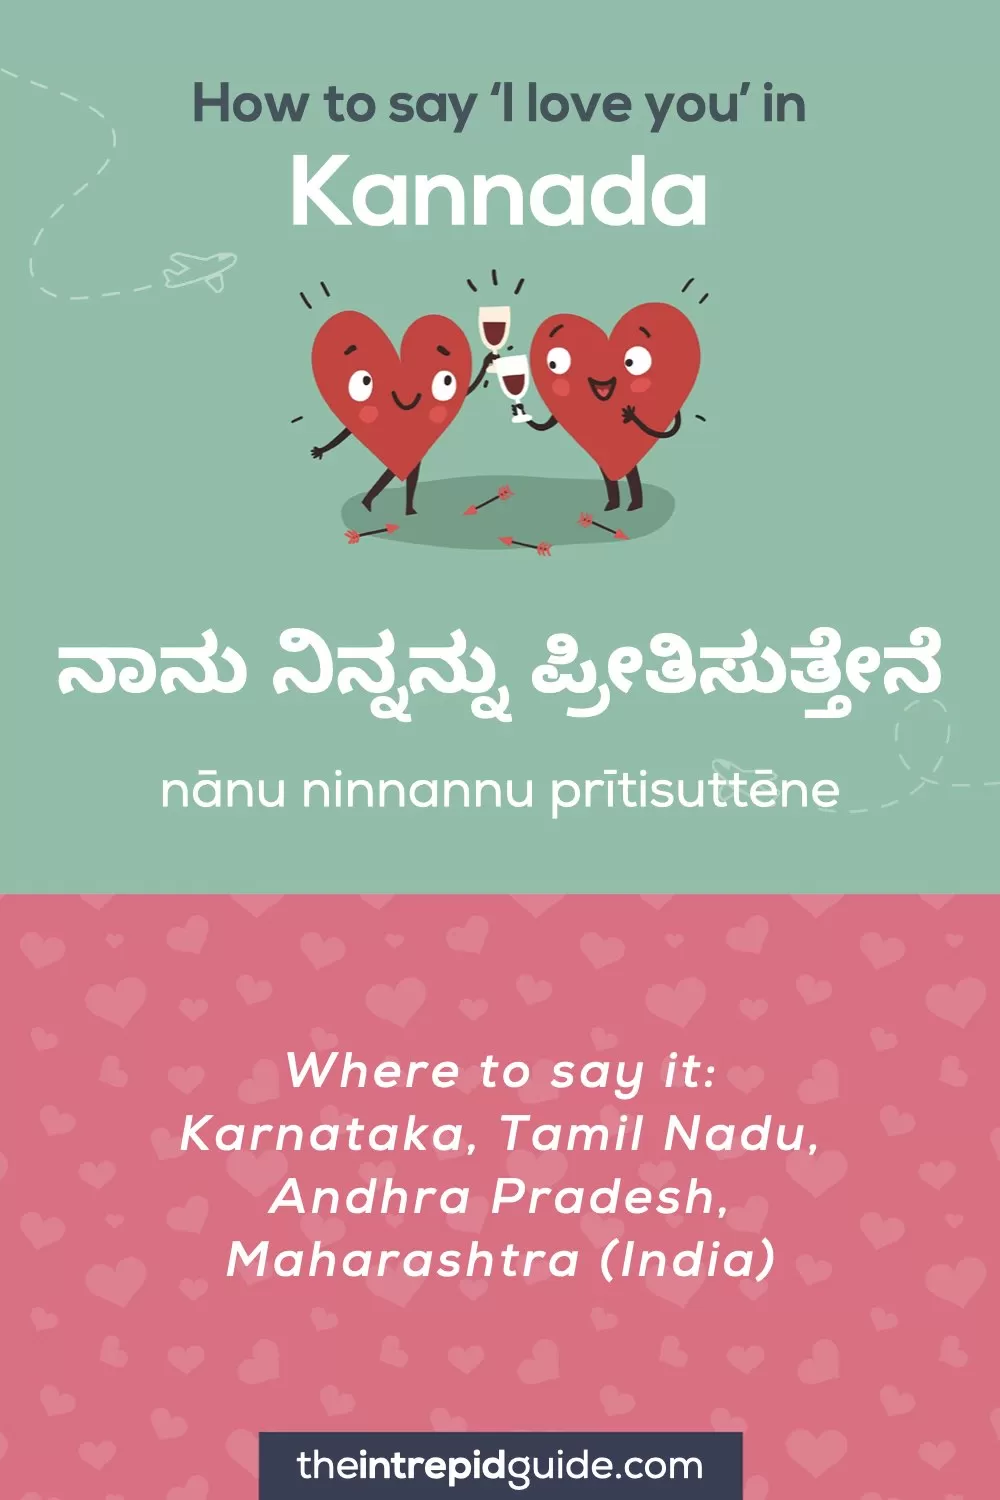 How to say I love you in different languages - Kannada - ನಾನು ನಿನ್ನನ್ನು ಪ್ರೀತಿಸುತ್ತೇನೆ